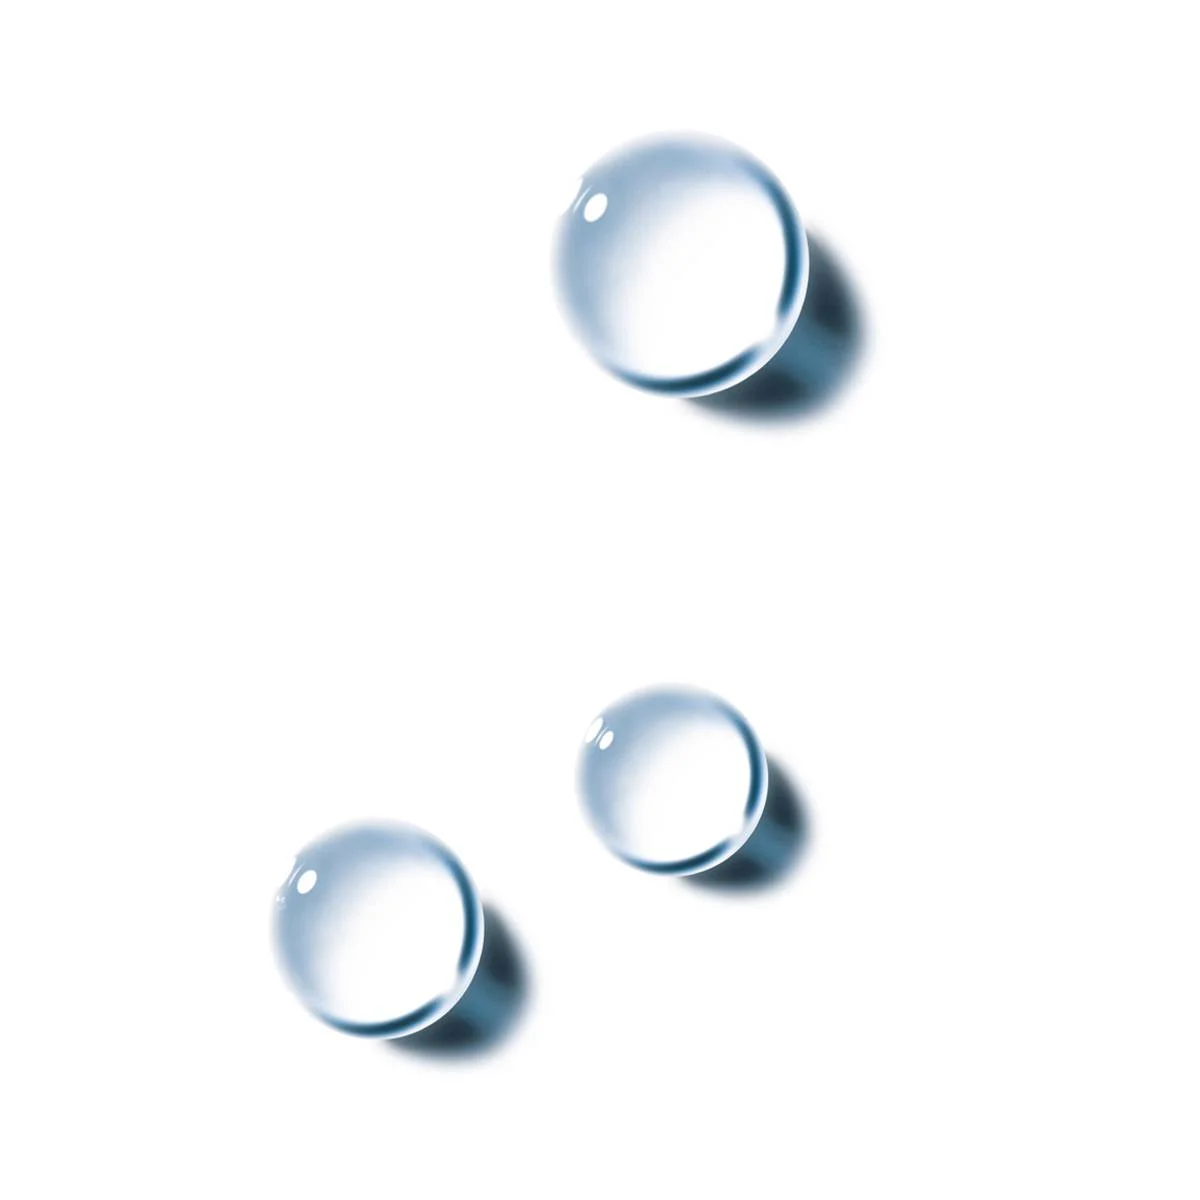 LA ROCHE POSAY – Eau Thermale Thermal Spring Water Ιαματικό Νερό – 300ml